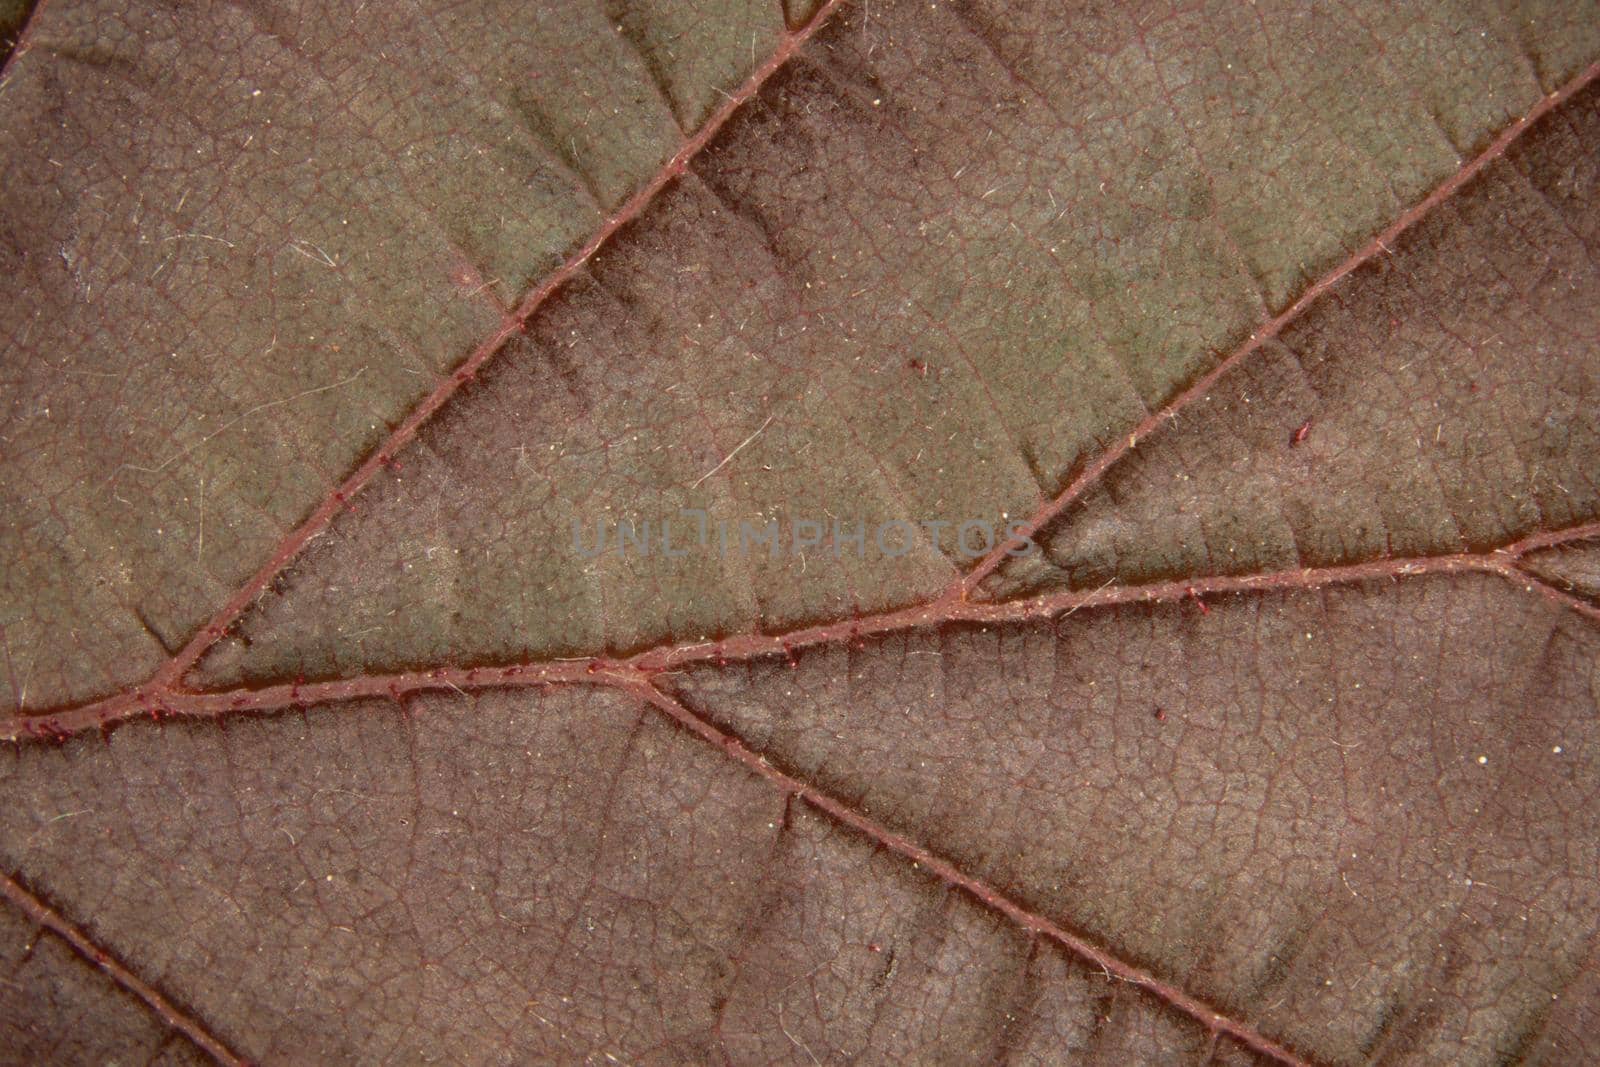 Leaf of a deciduous tree by Dr-Lange